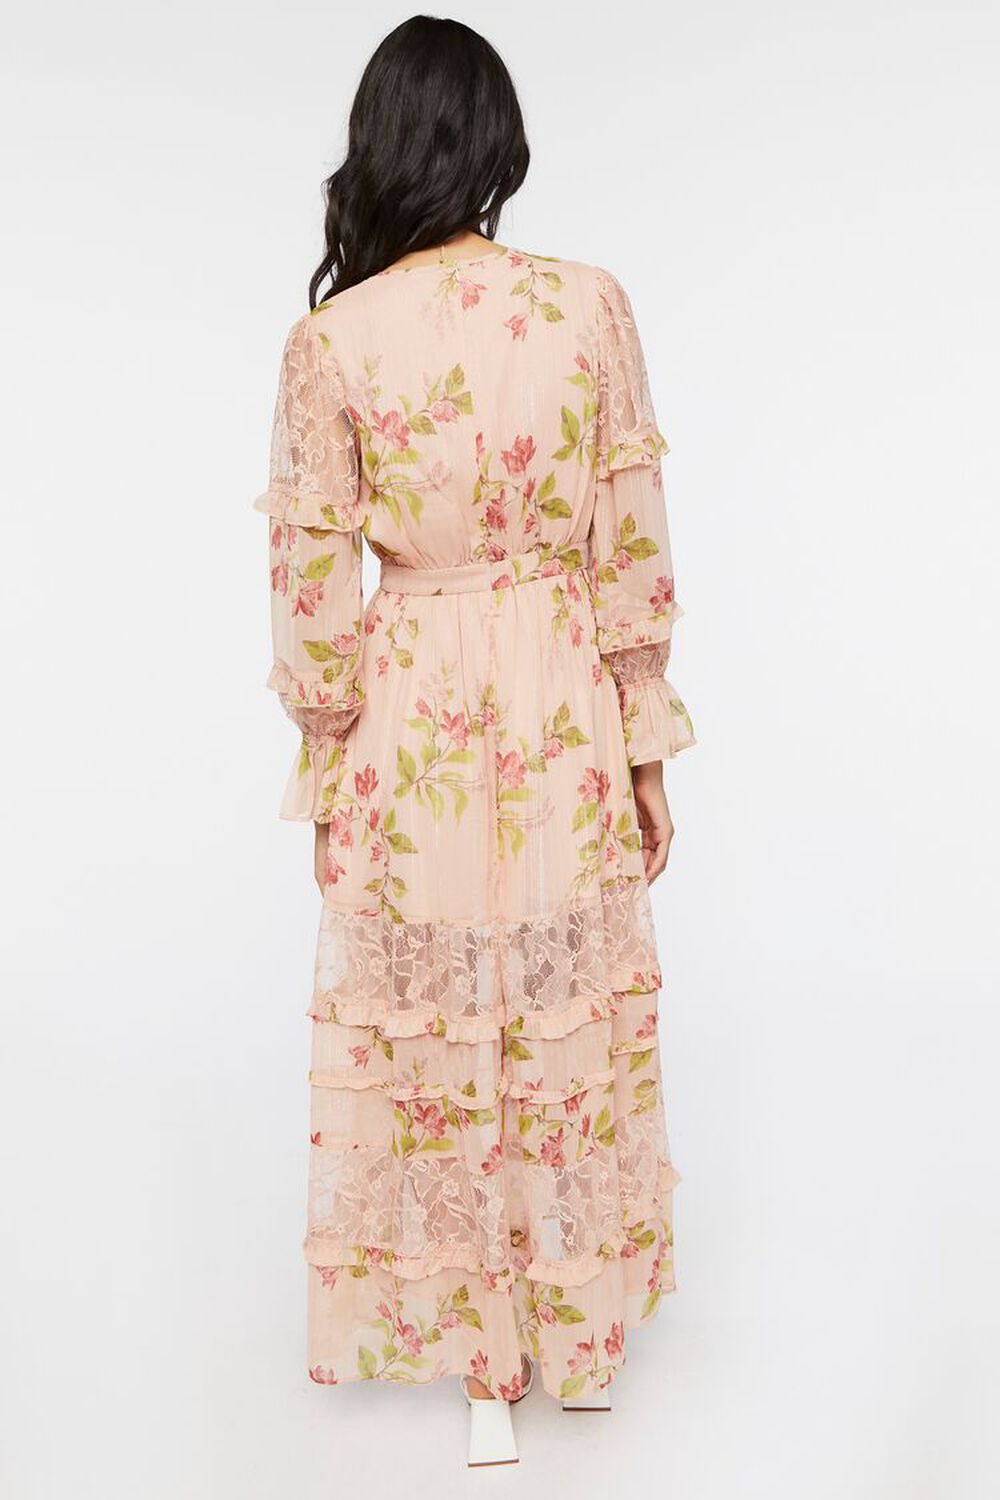 BLUSH Lace-Trim Tiered Floral Maxi Dress, image 3